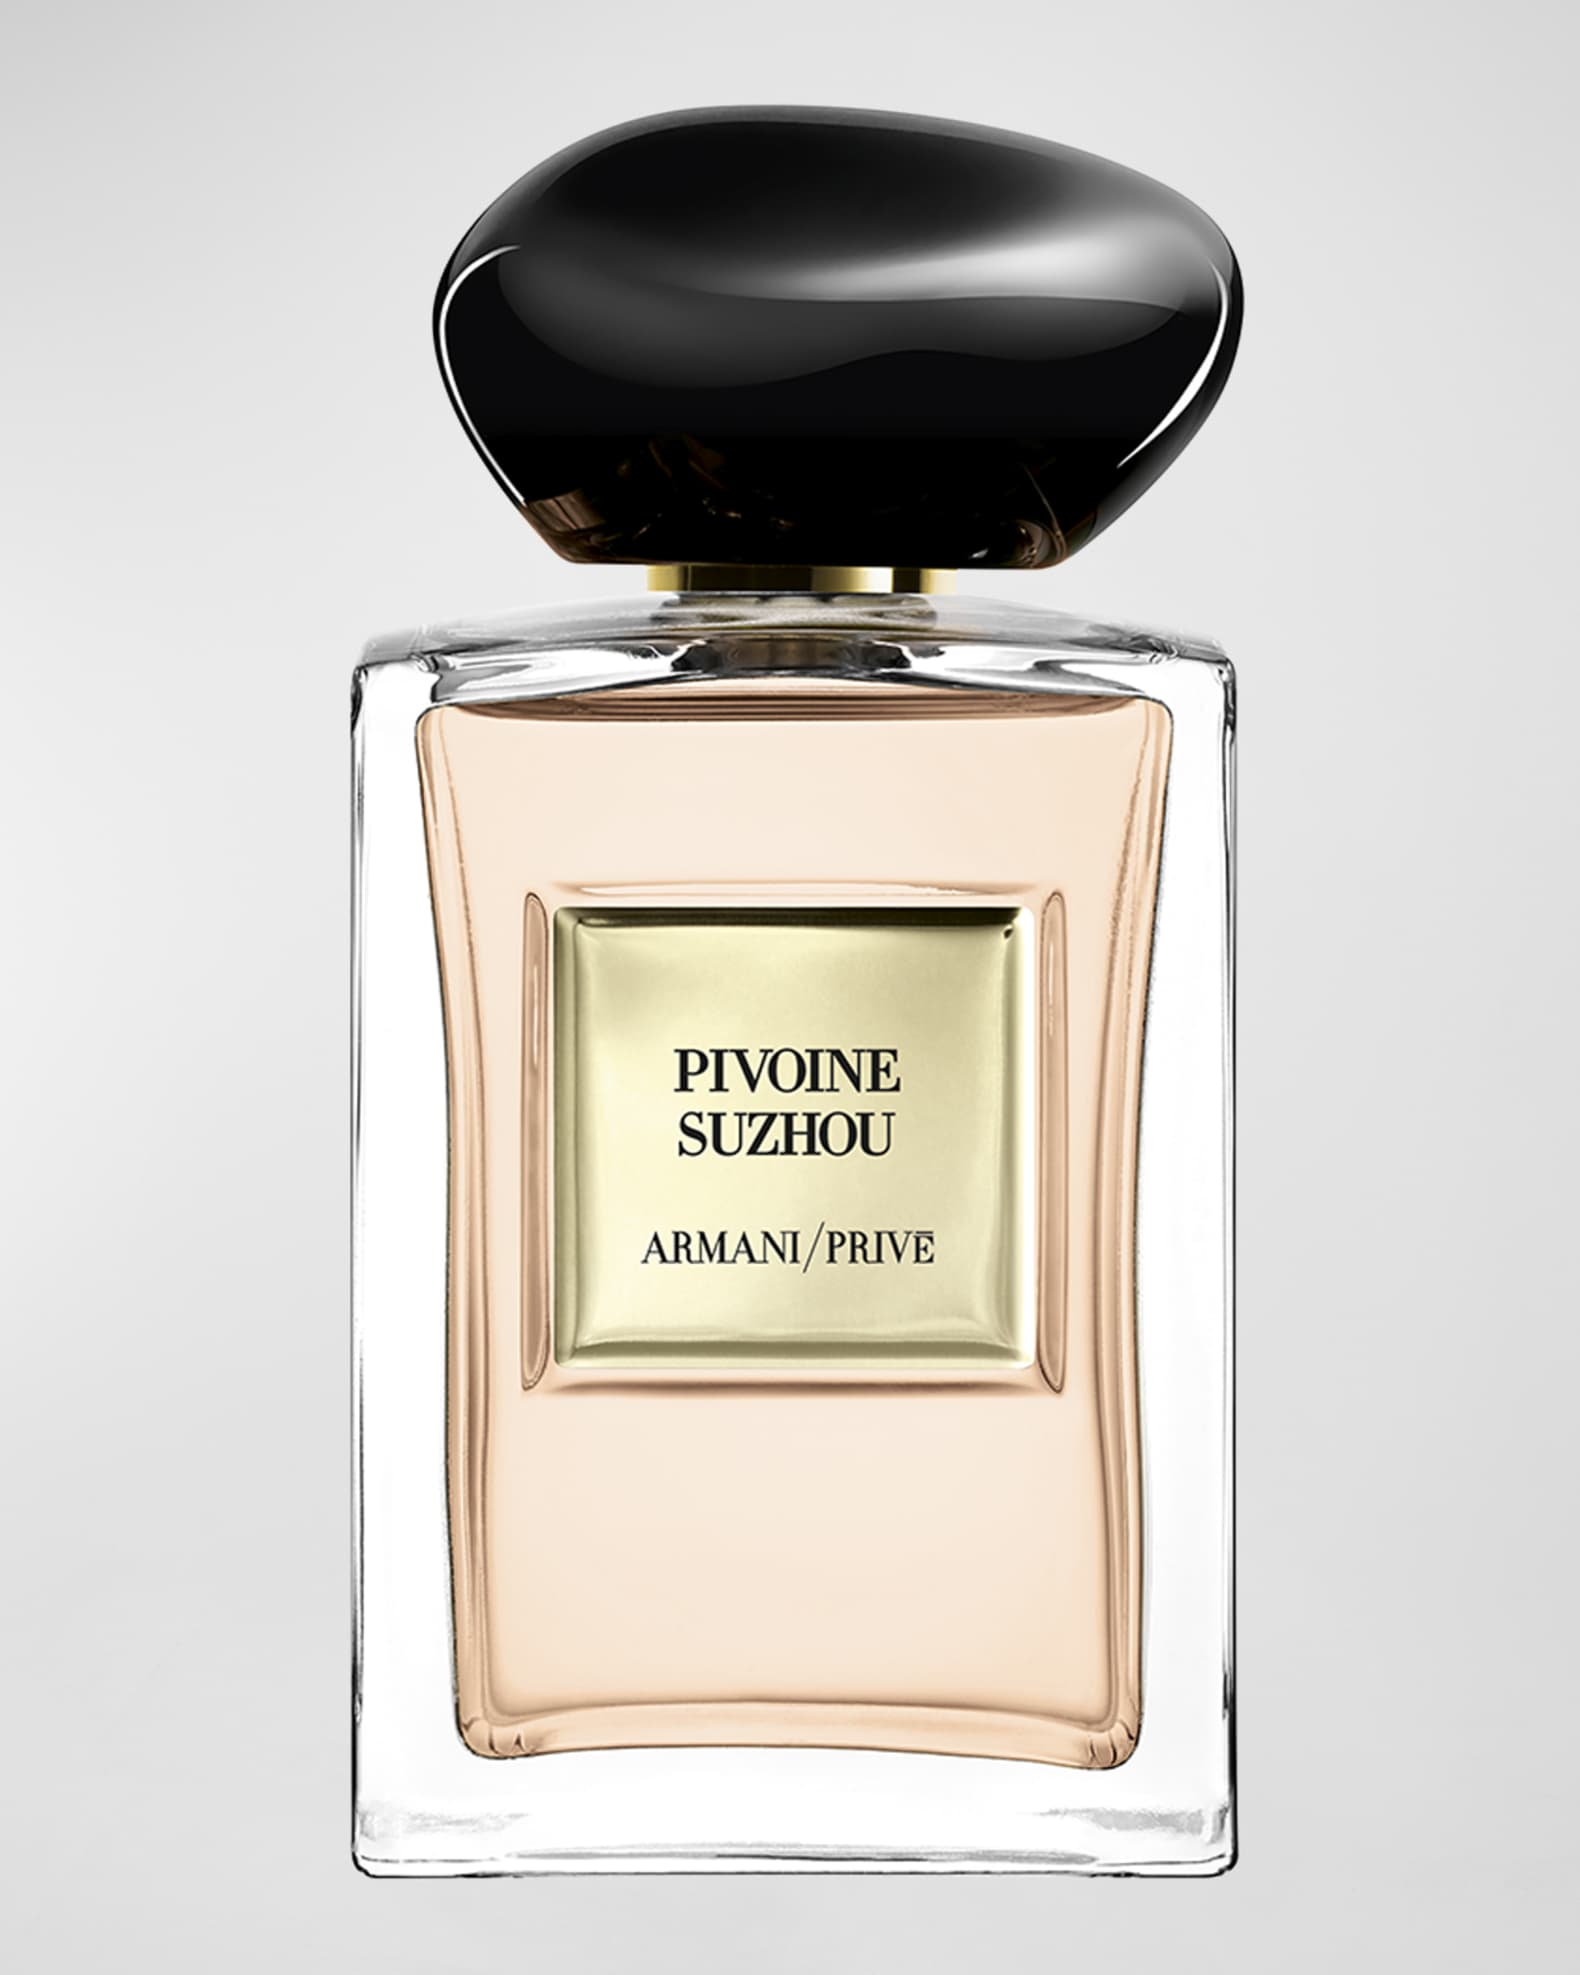 Perfume Tester Louis vuitton Matiere noire Perfume Tester Quality